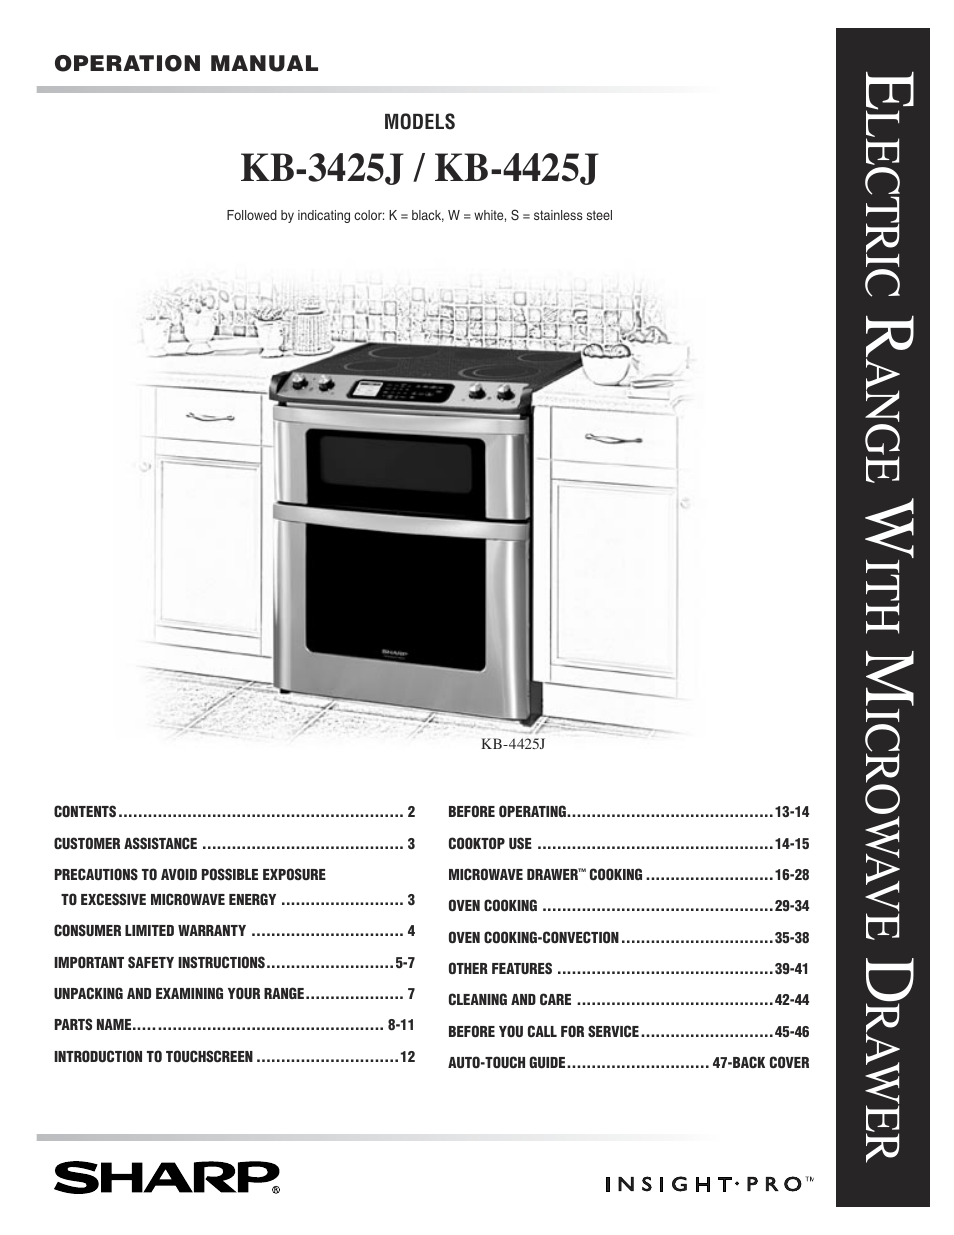 Sharp KB-4425J User Manual | 48 pages